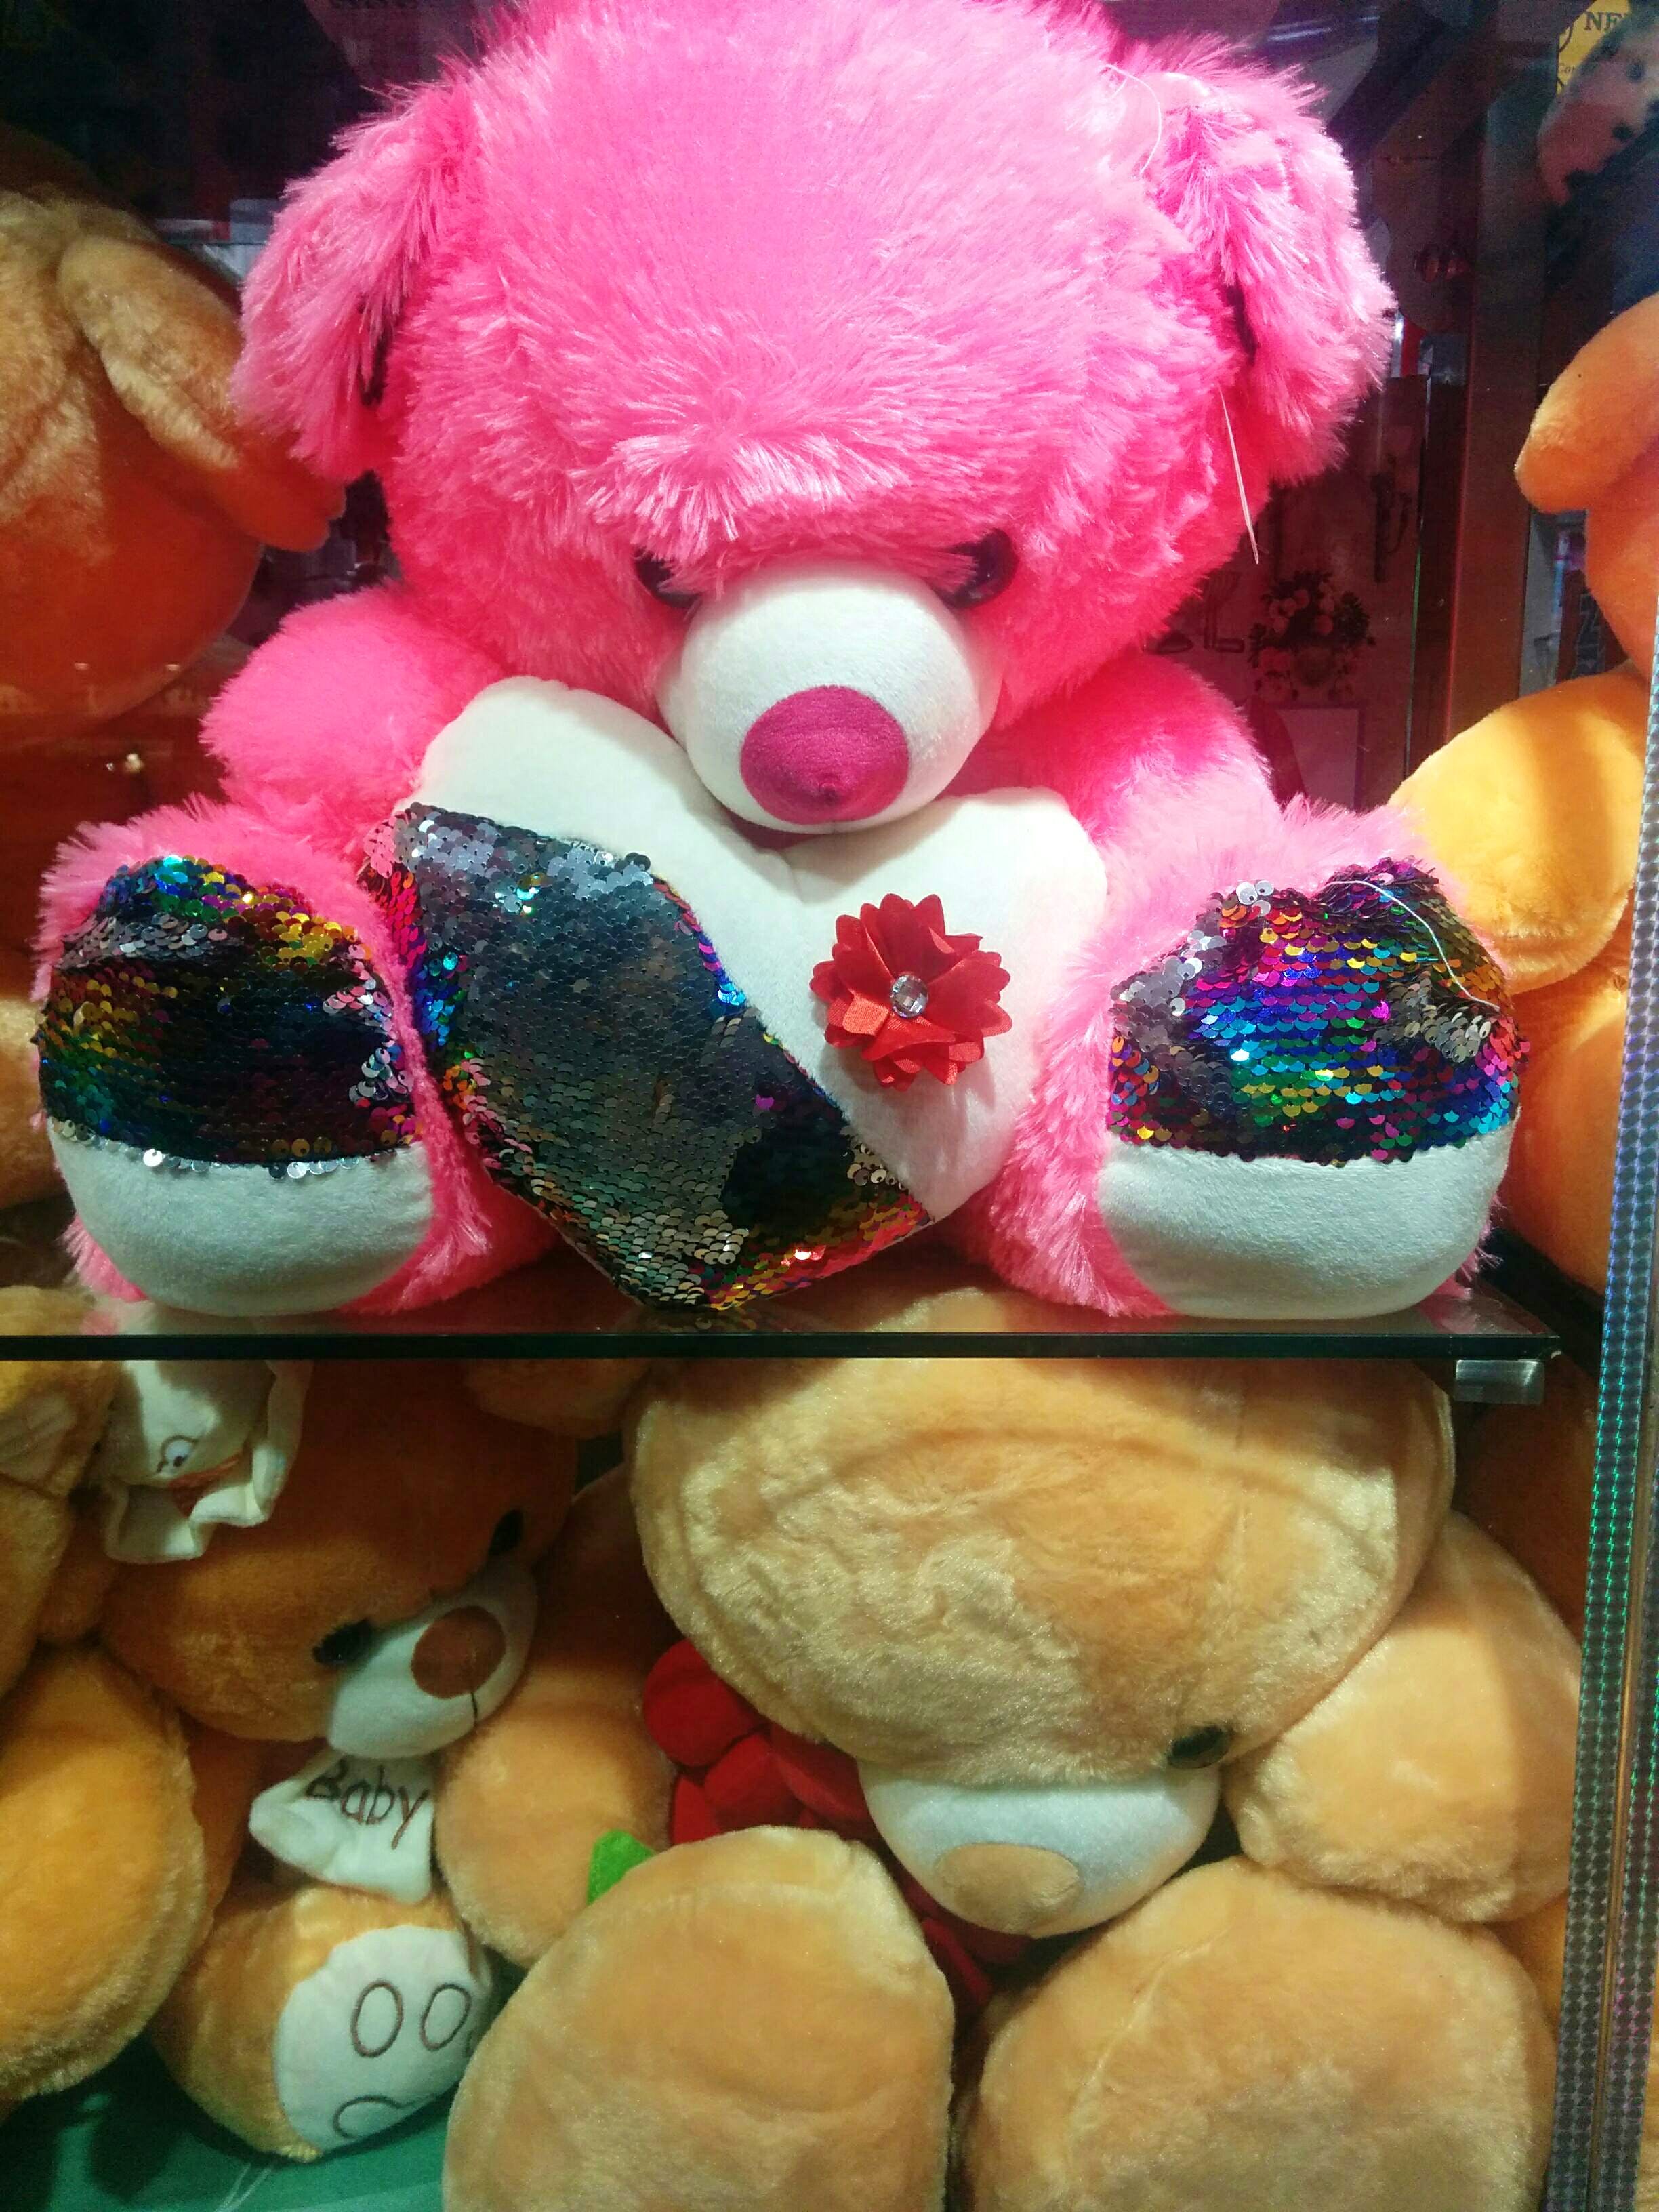 Stuffed toy,Teddy bear,Plush,Toy,Pink,Textile,Bear